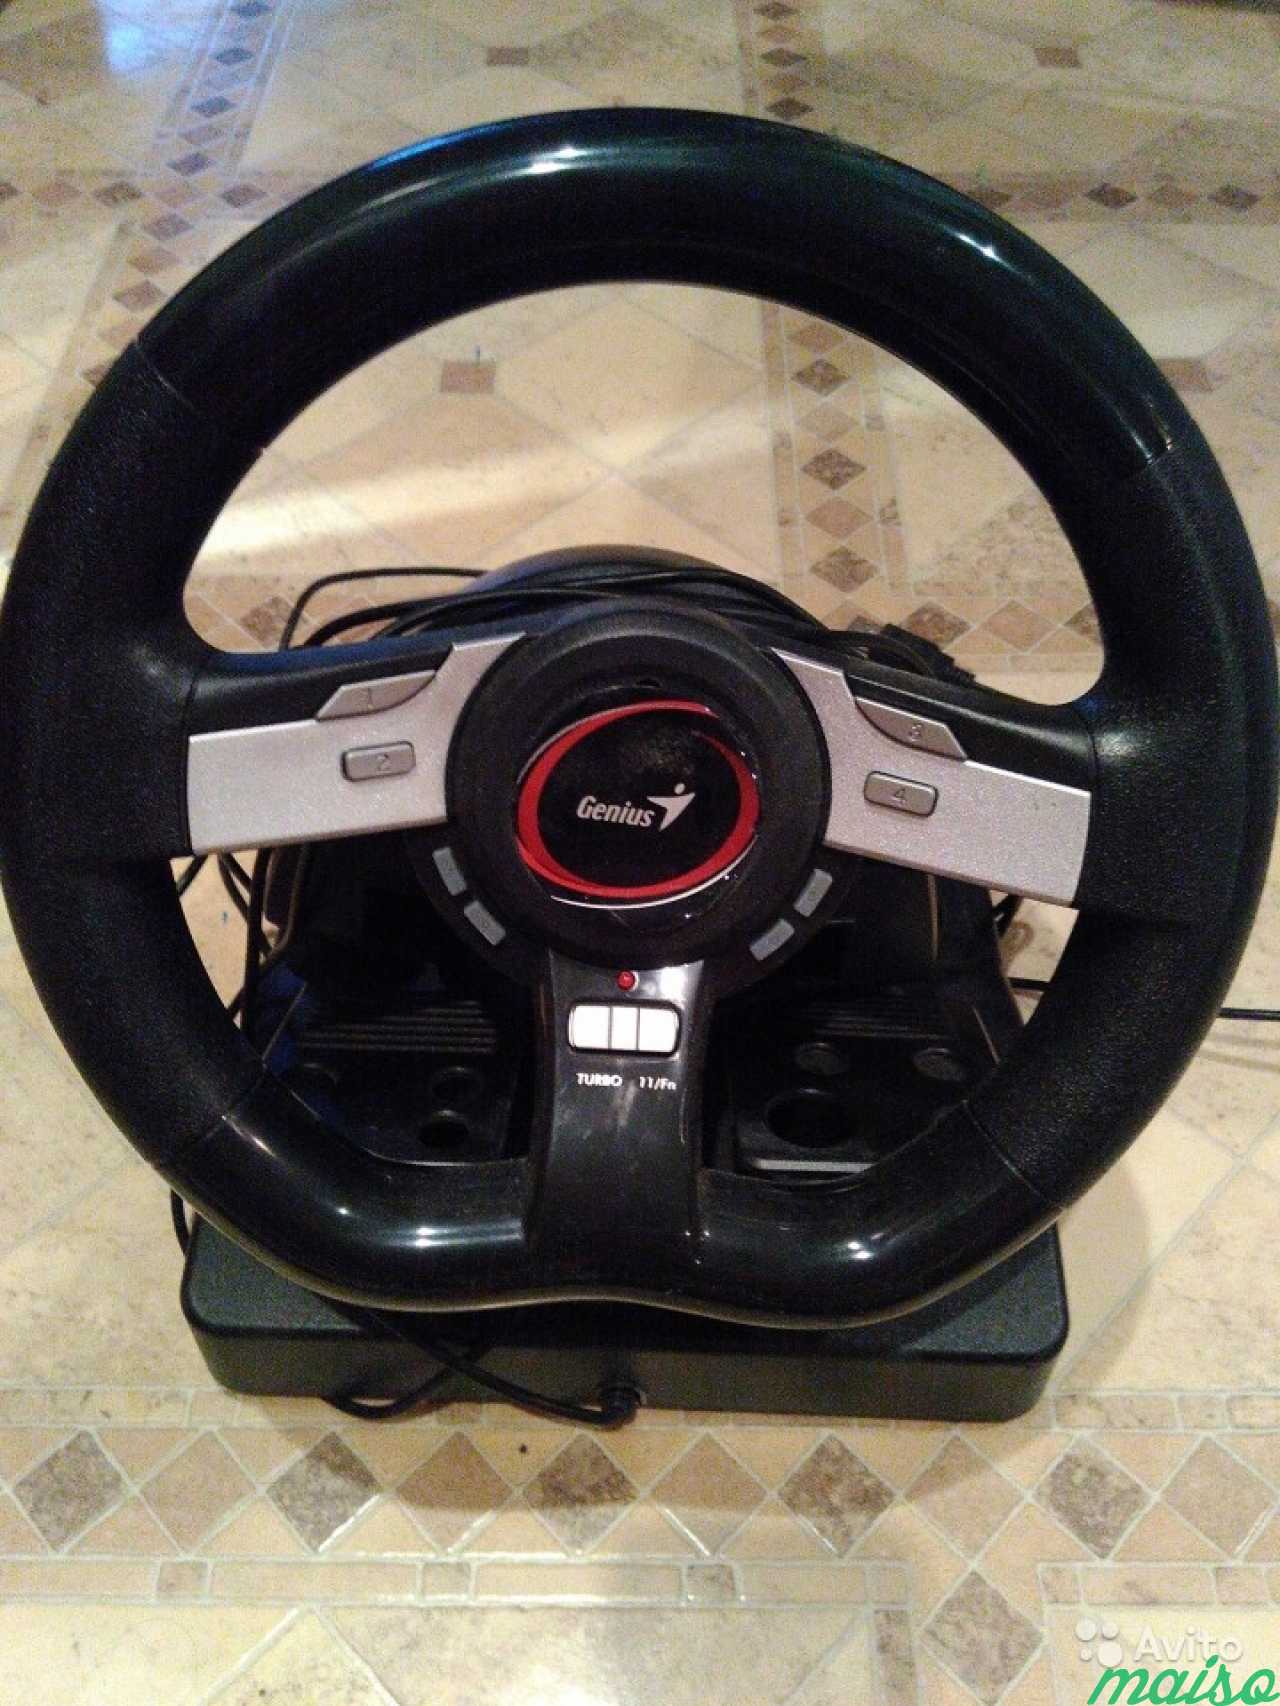 Руль спид. Genius Speed Wheel 5. Руль Speed Wheel 5. Genius Speed Wheel 5 Pro. Genius руль с педалями Speed Wheel 5.